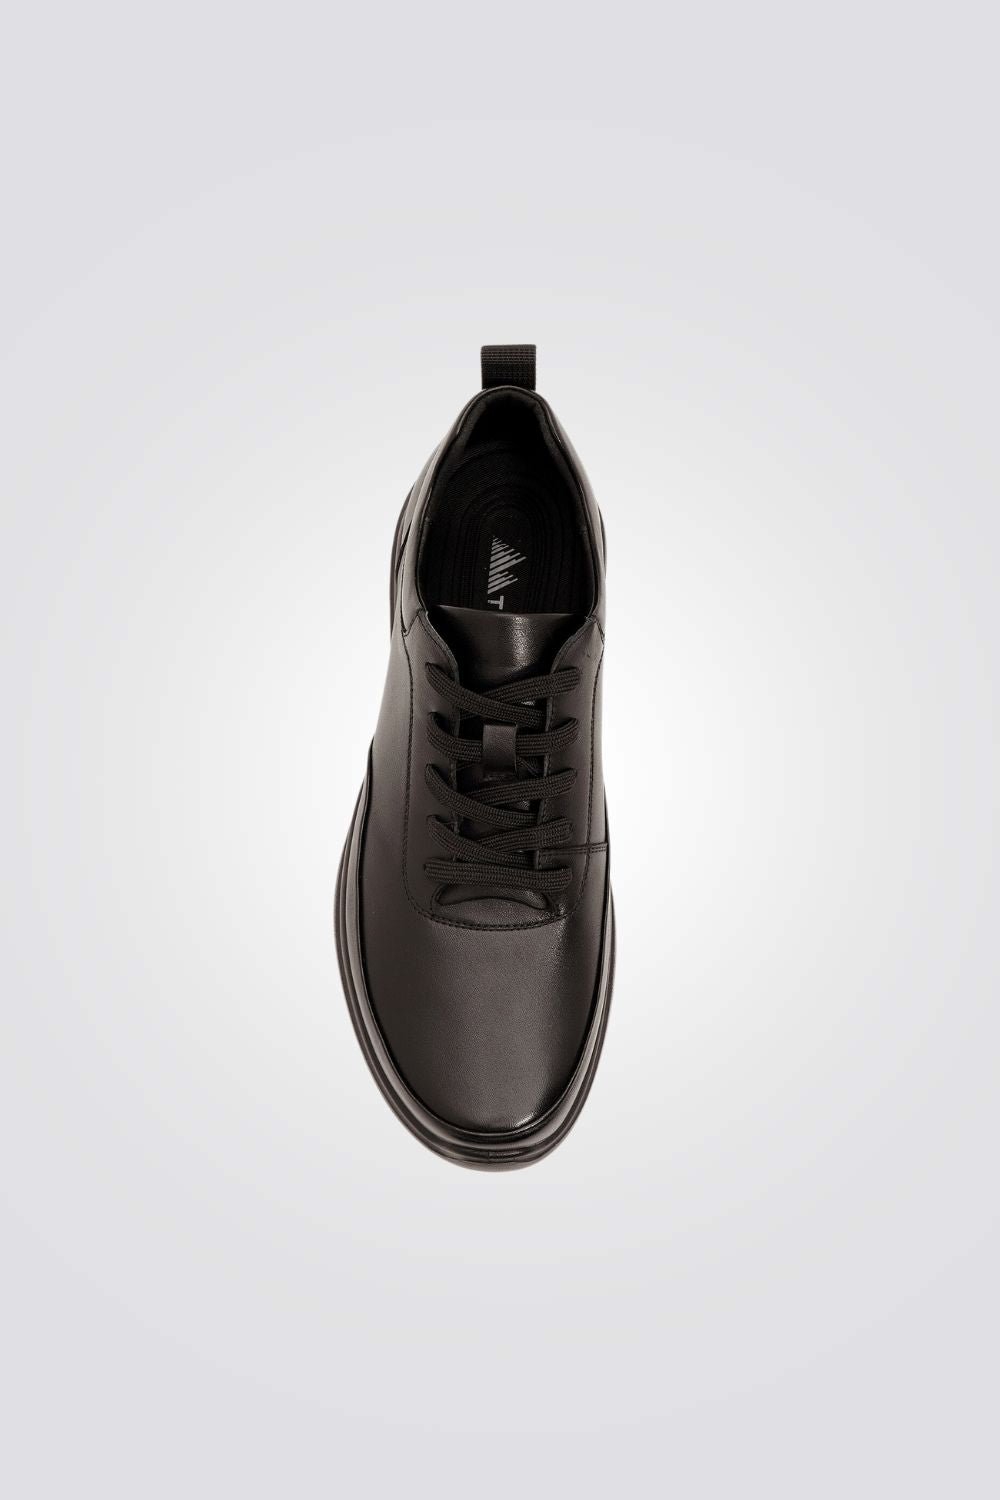 TRAK - נעל עור אלגנט צבע שחור דגם אסף - MASHBIR//365